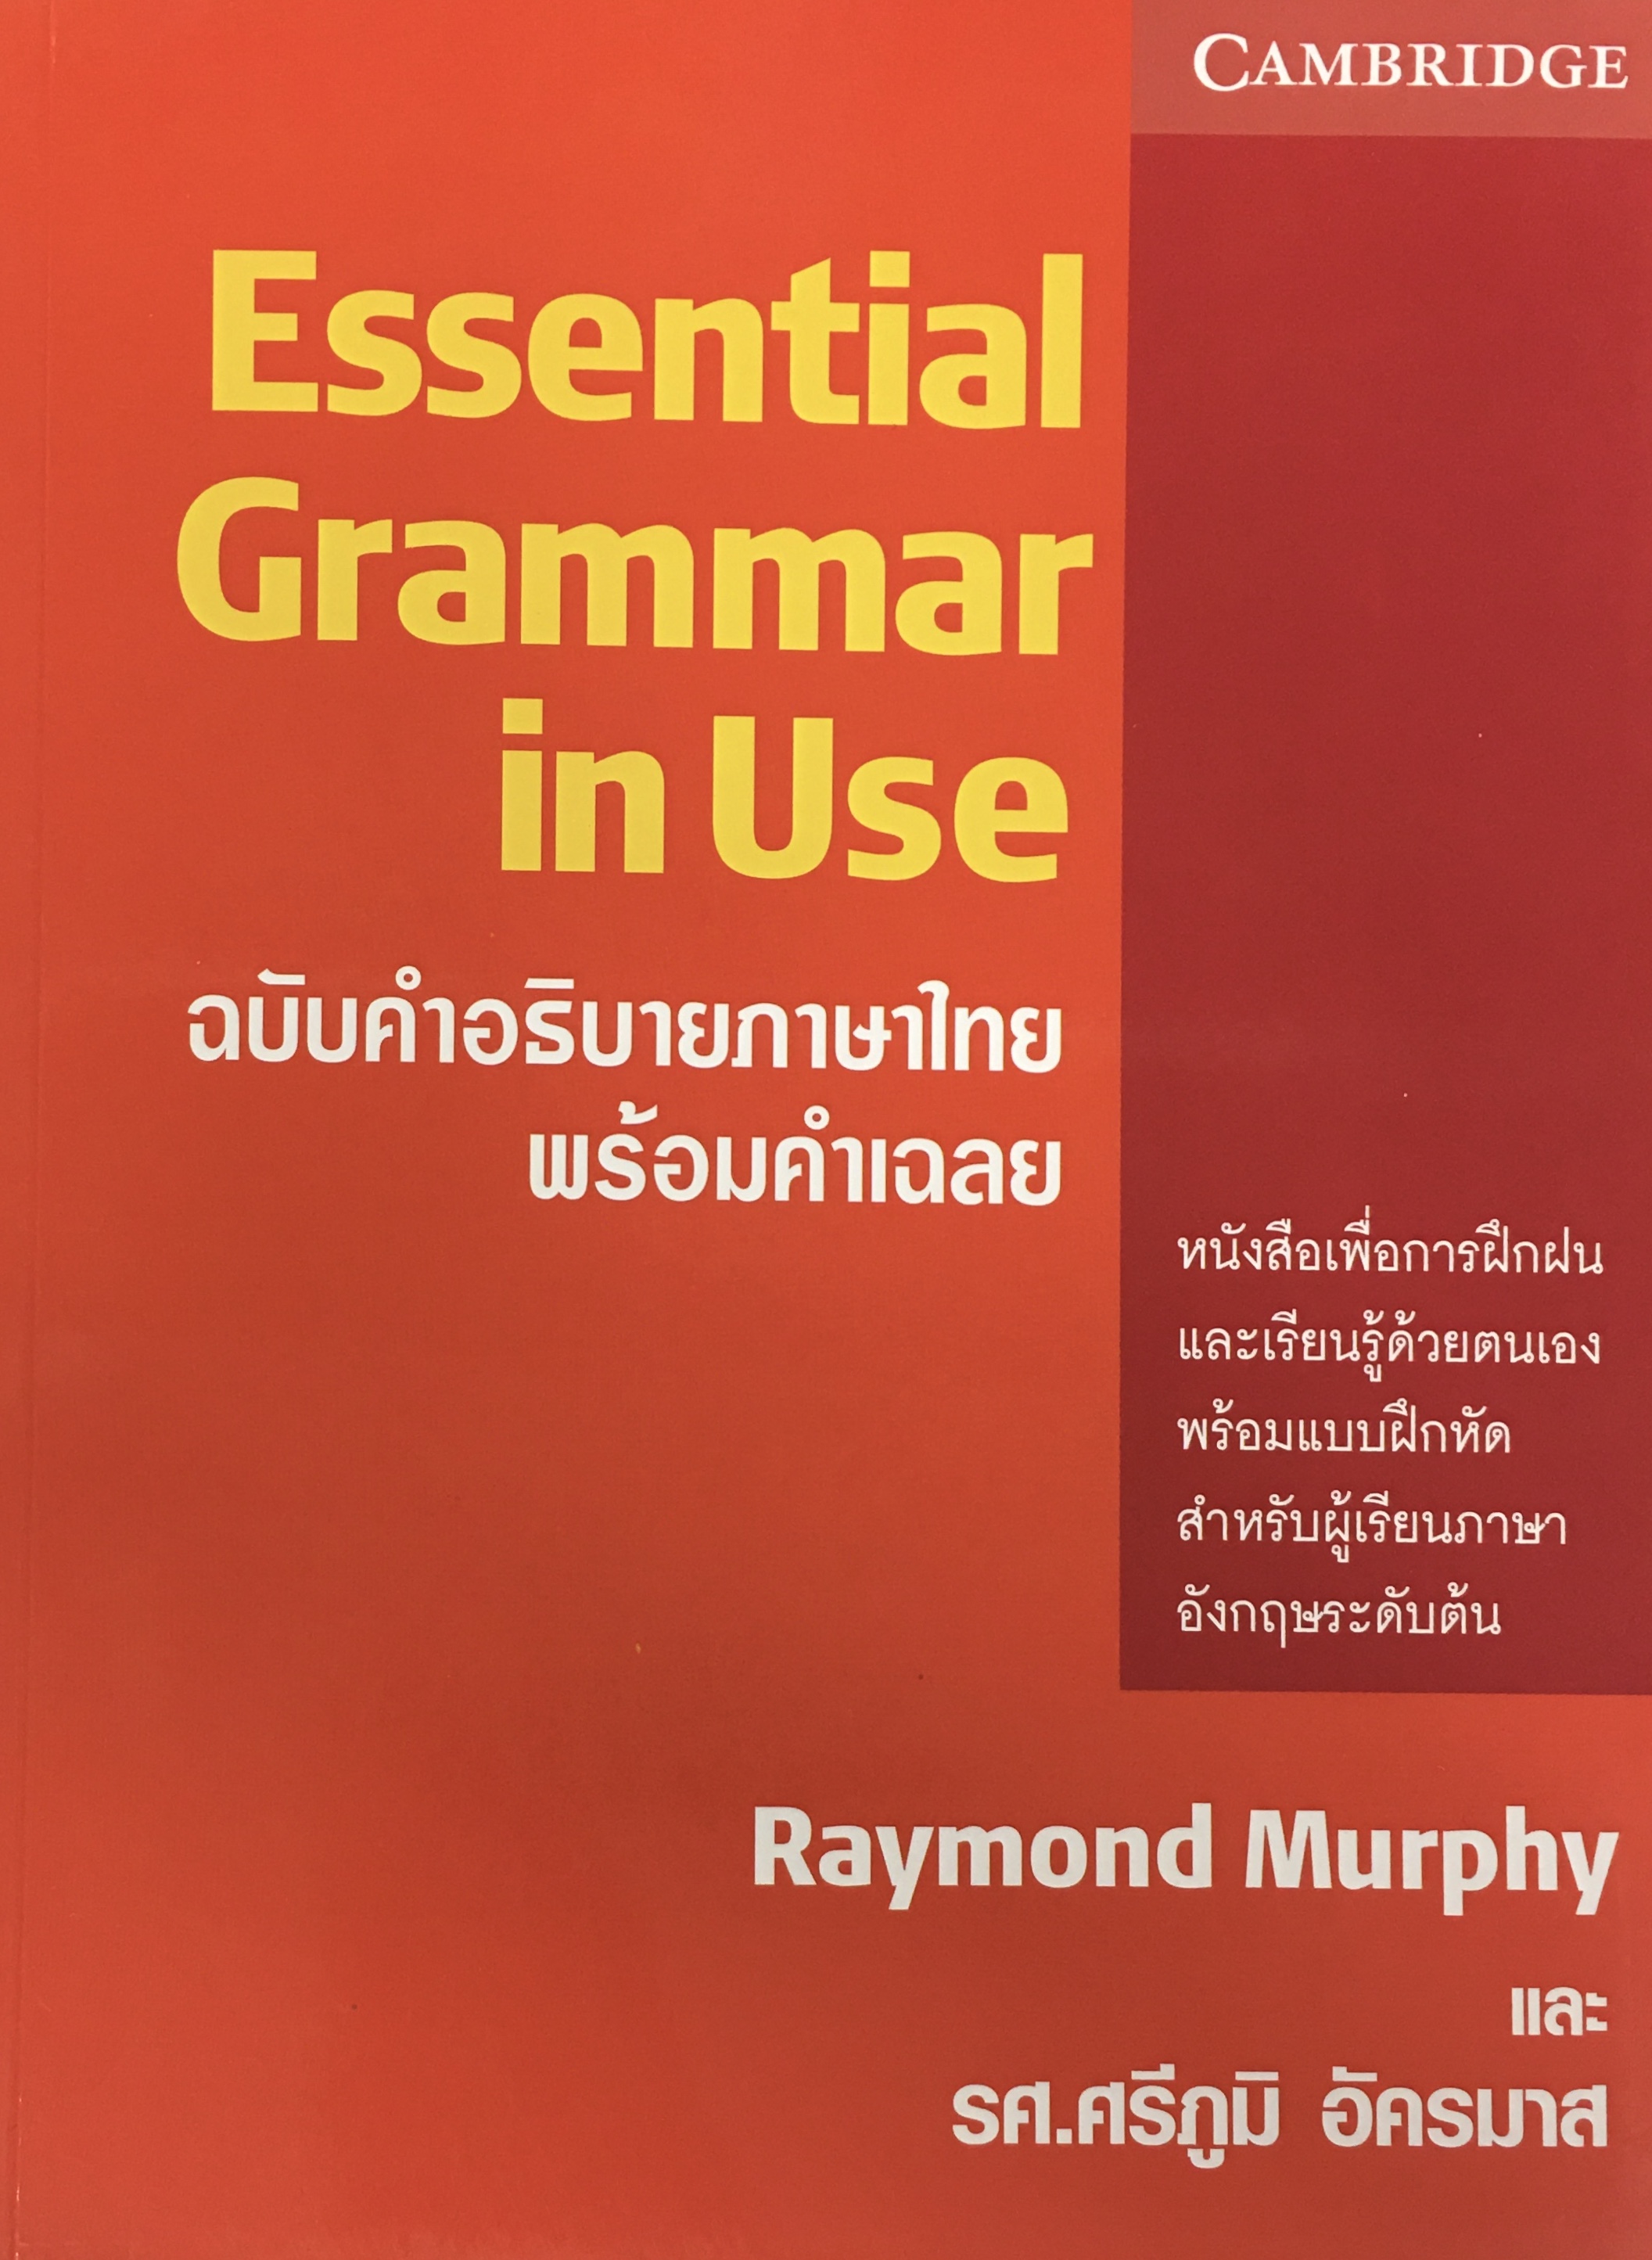 Essential Grammar in Use ฉบับคำอธิบายภาษาไทย พร้อมคำเฉลย